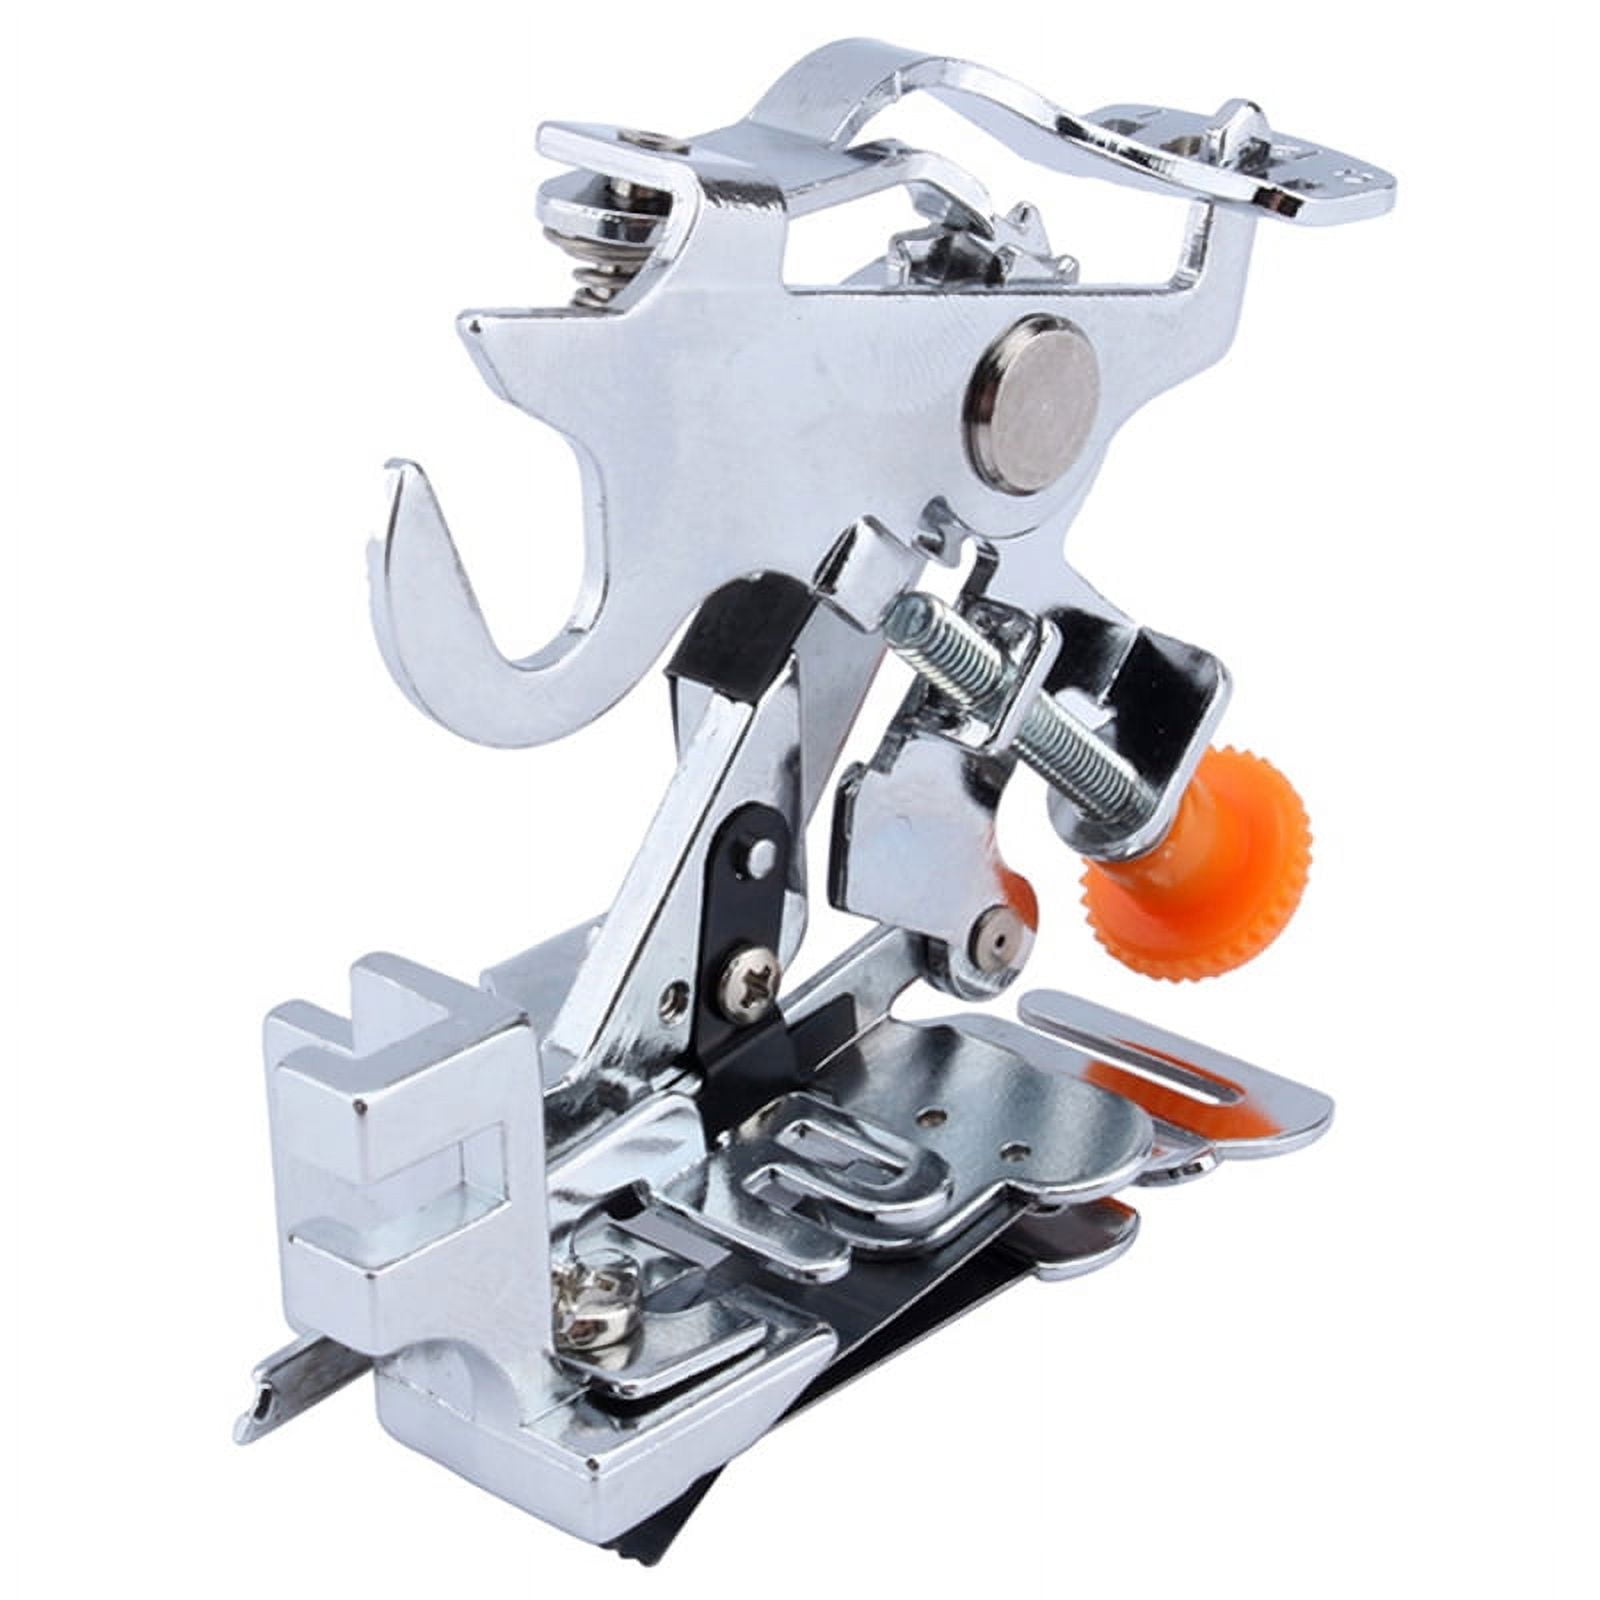 Singer Heavy Duty 4432 Sewing Machine and Presser Foot Kit Bundle 